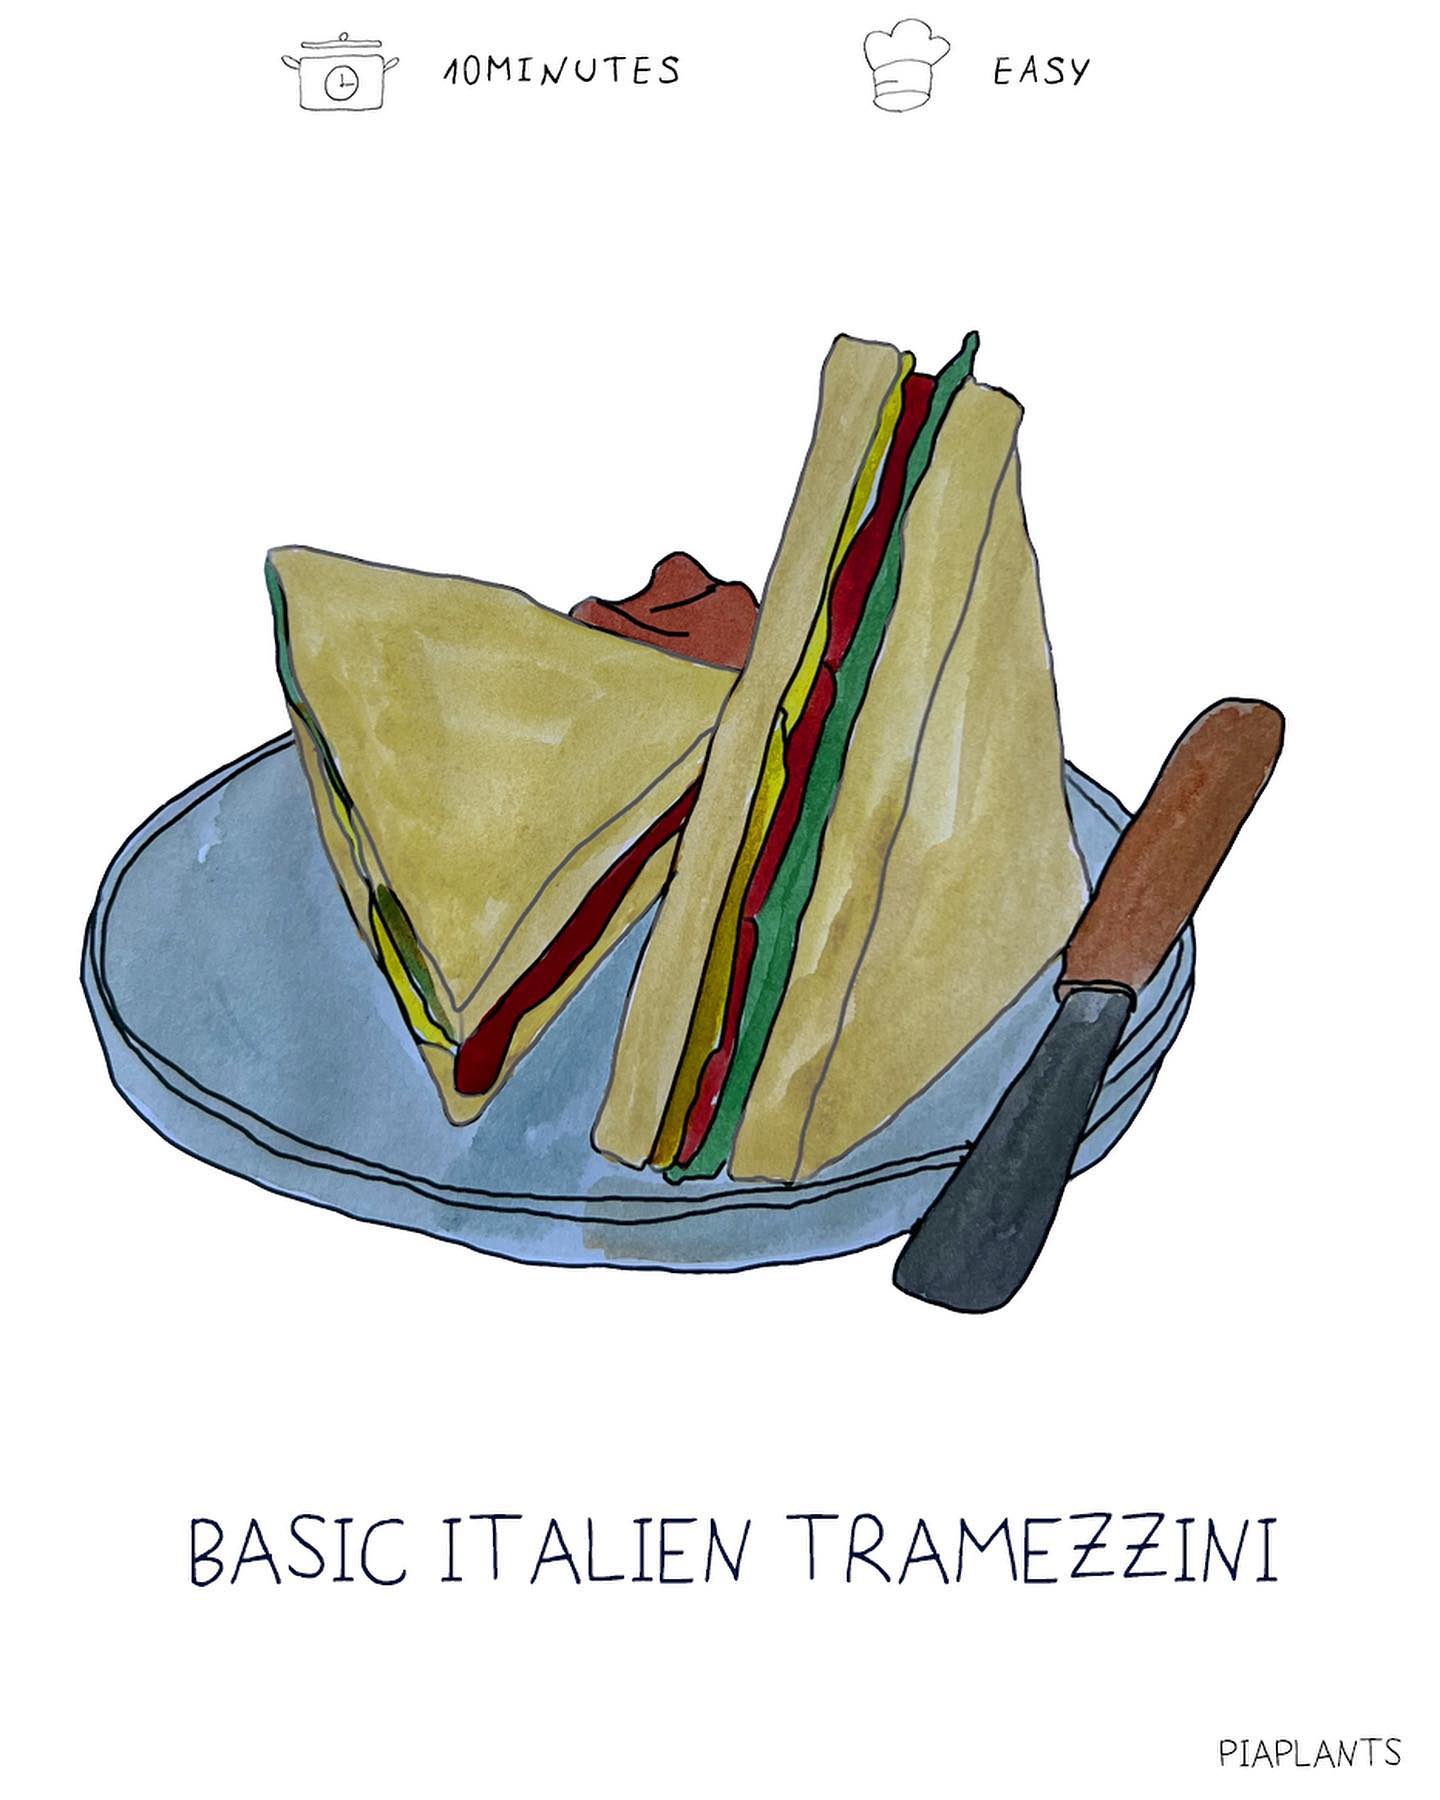 Easy Vegan Tramezzini Sandwich